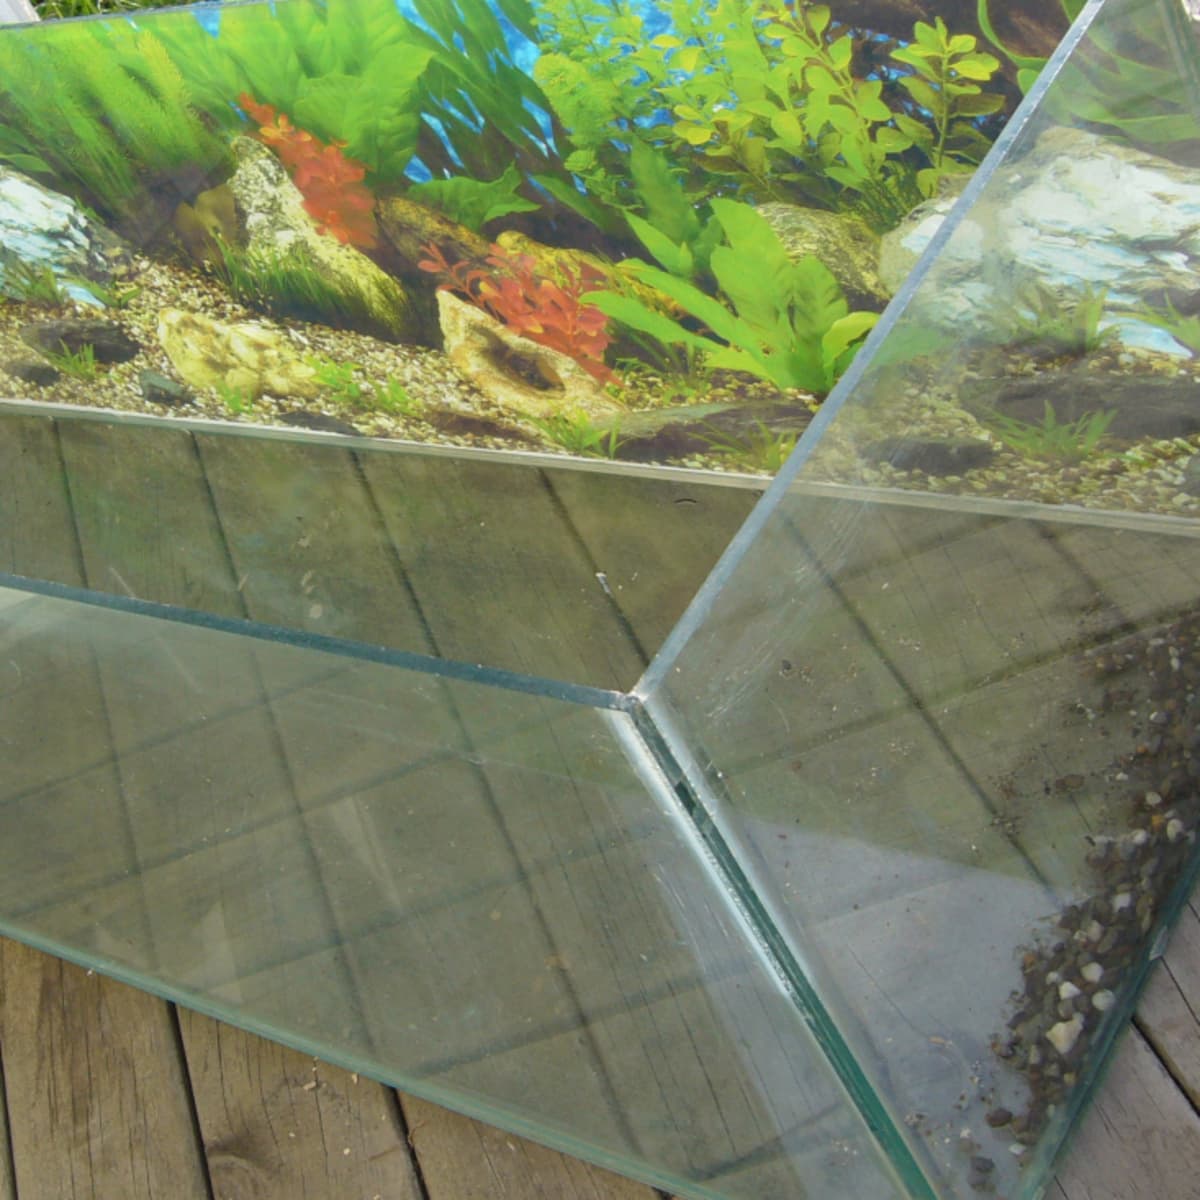 How to Clean an Old Aquarium Glass? 